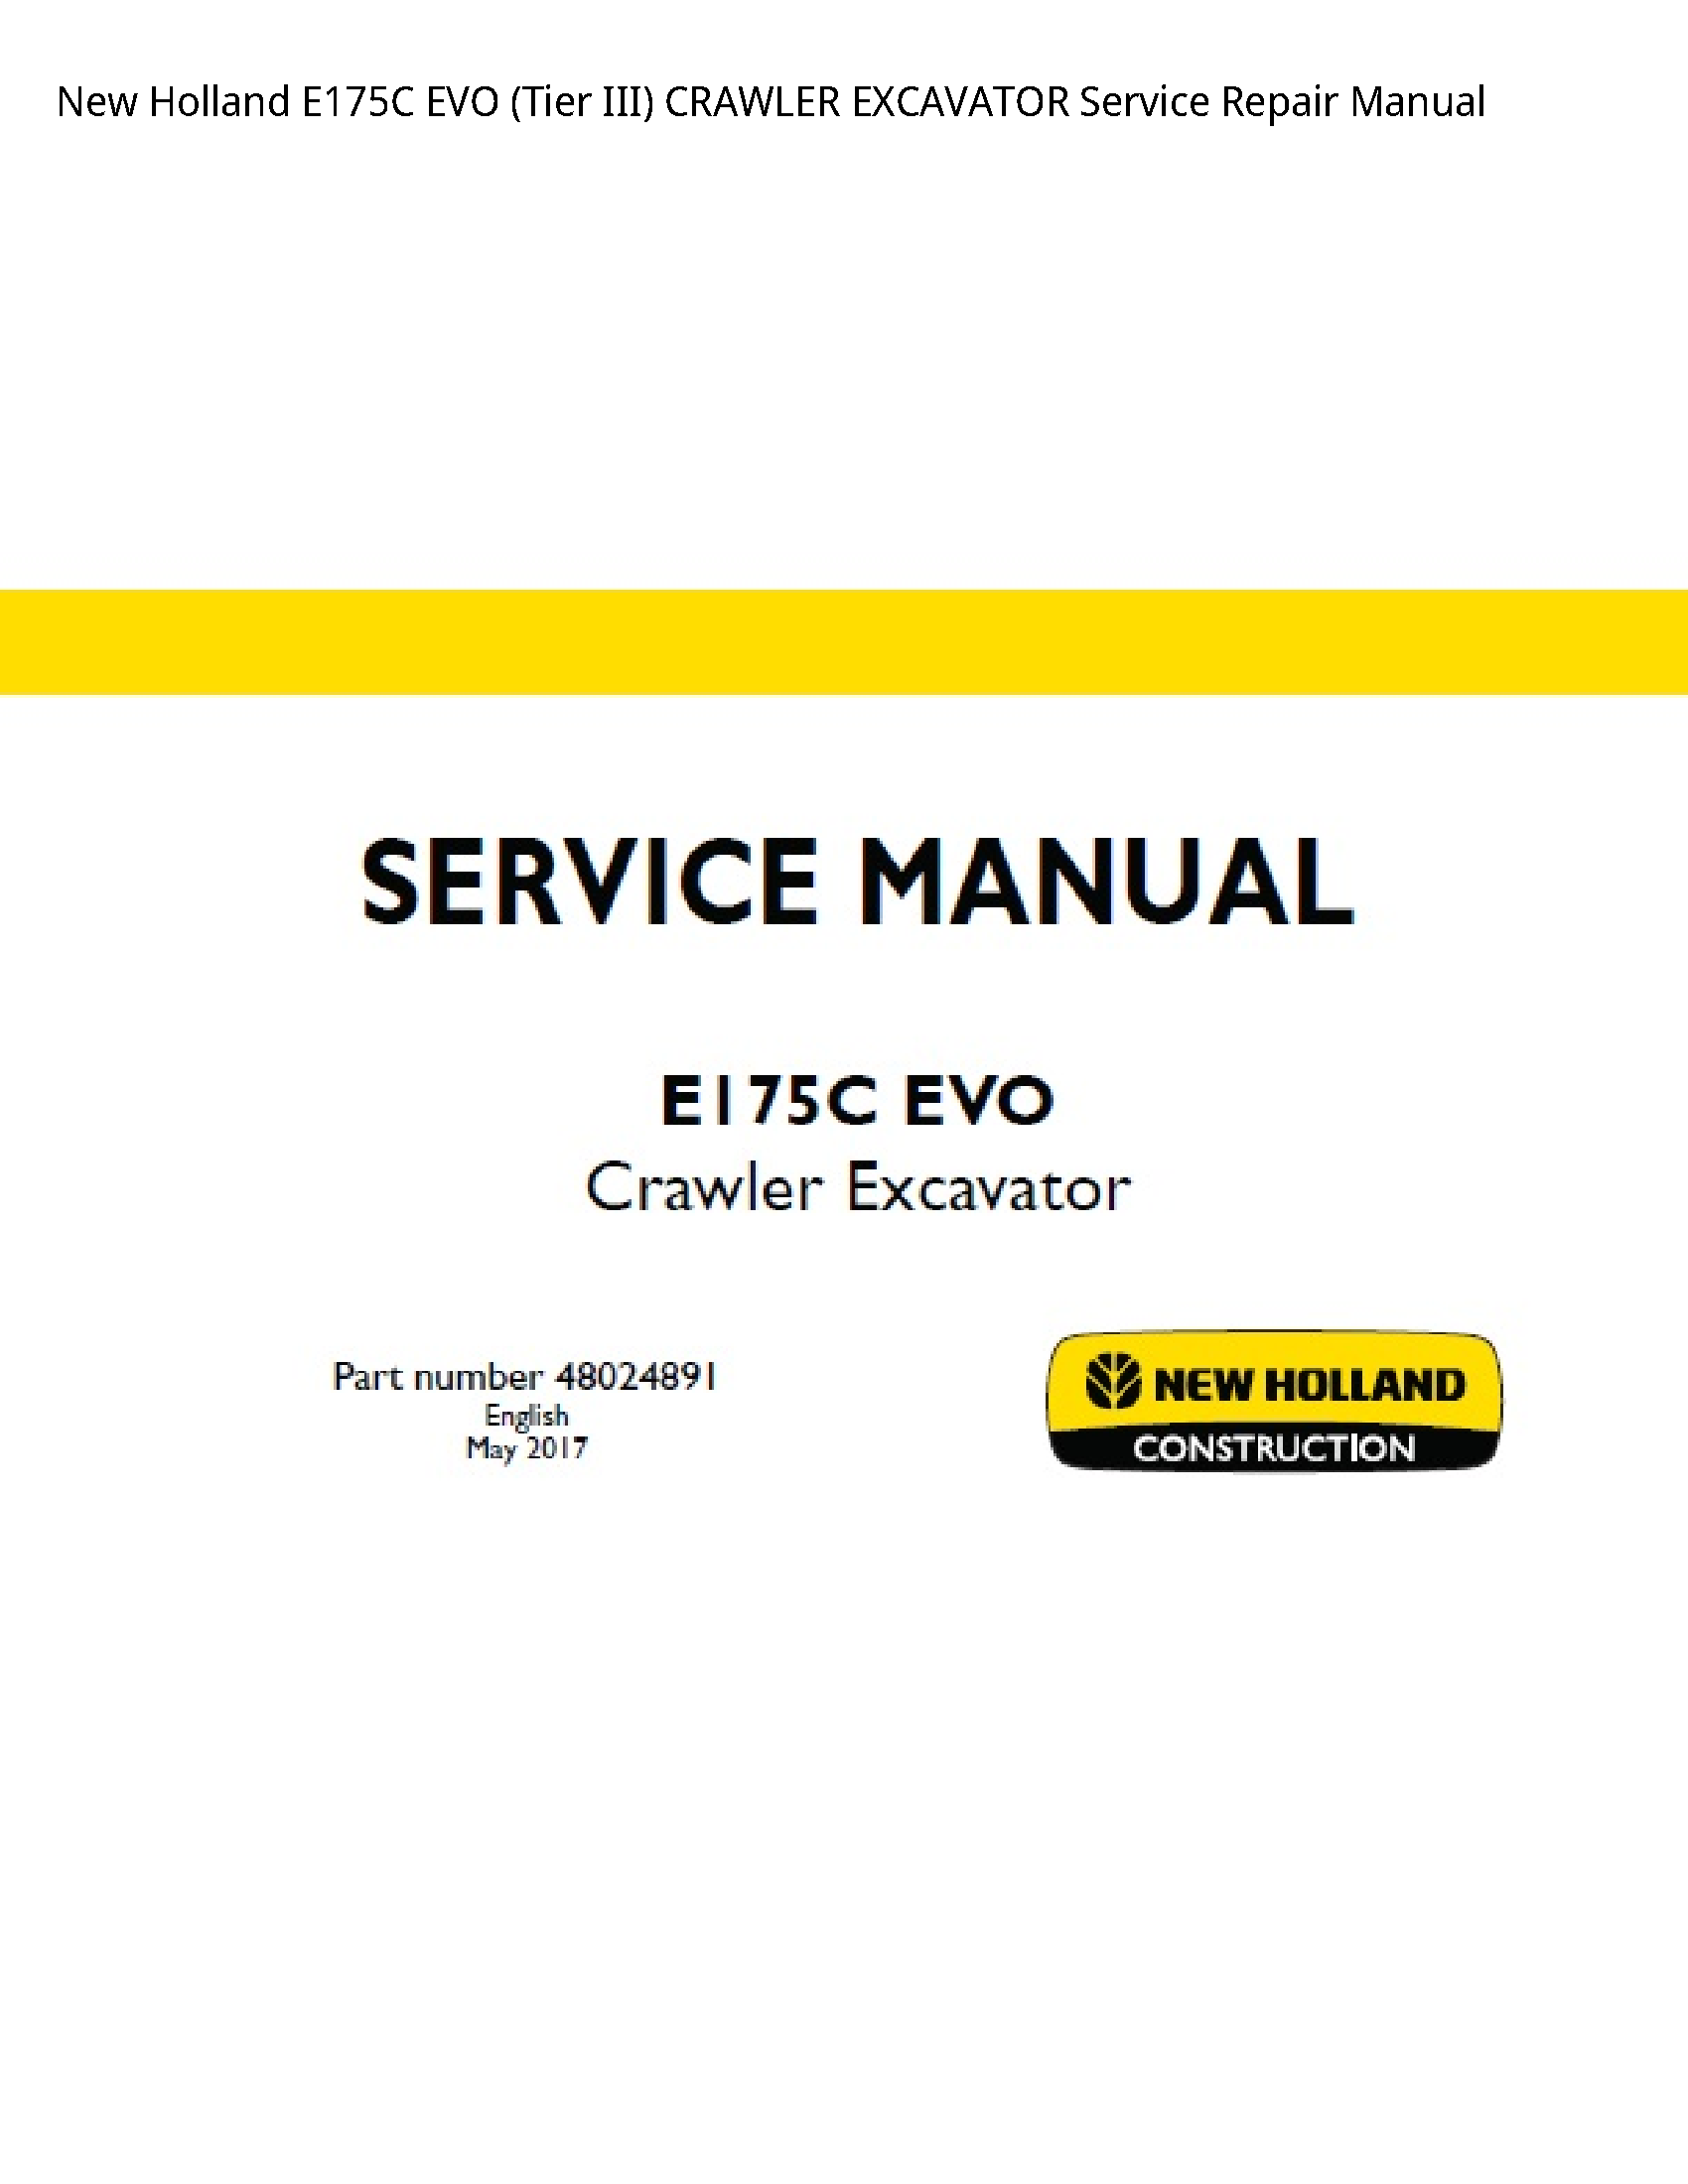 New Holland E175C EVO (Tier III) CRAWLER EXCAVATOR manual